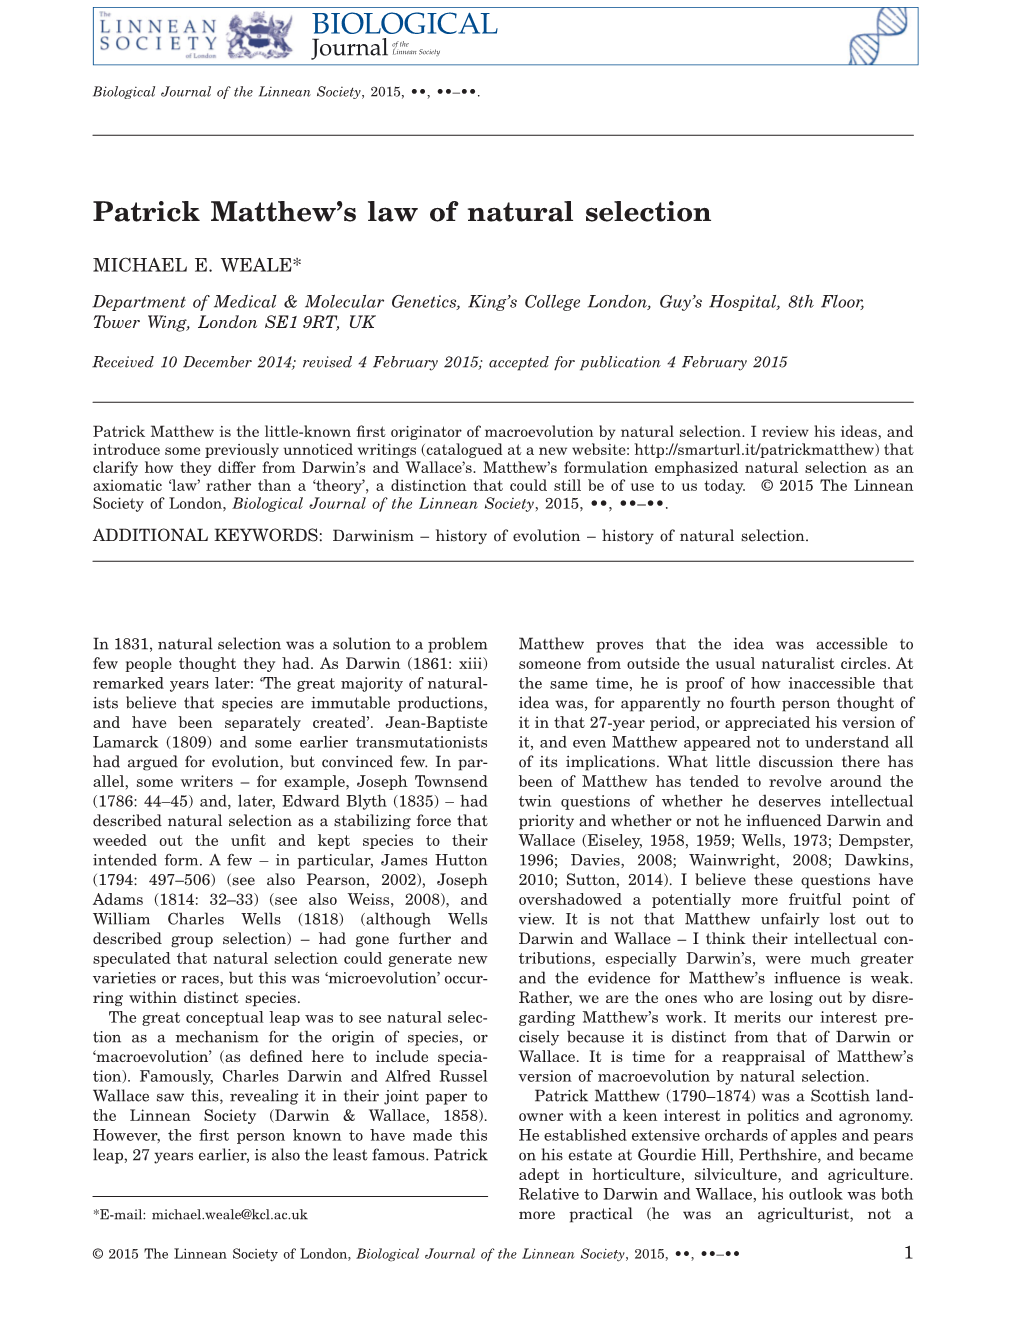 Patrick Matthews Law of Natural Selection